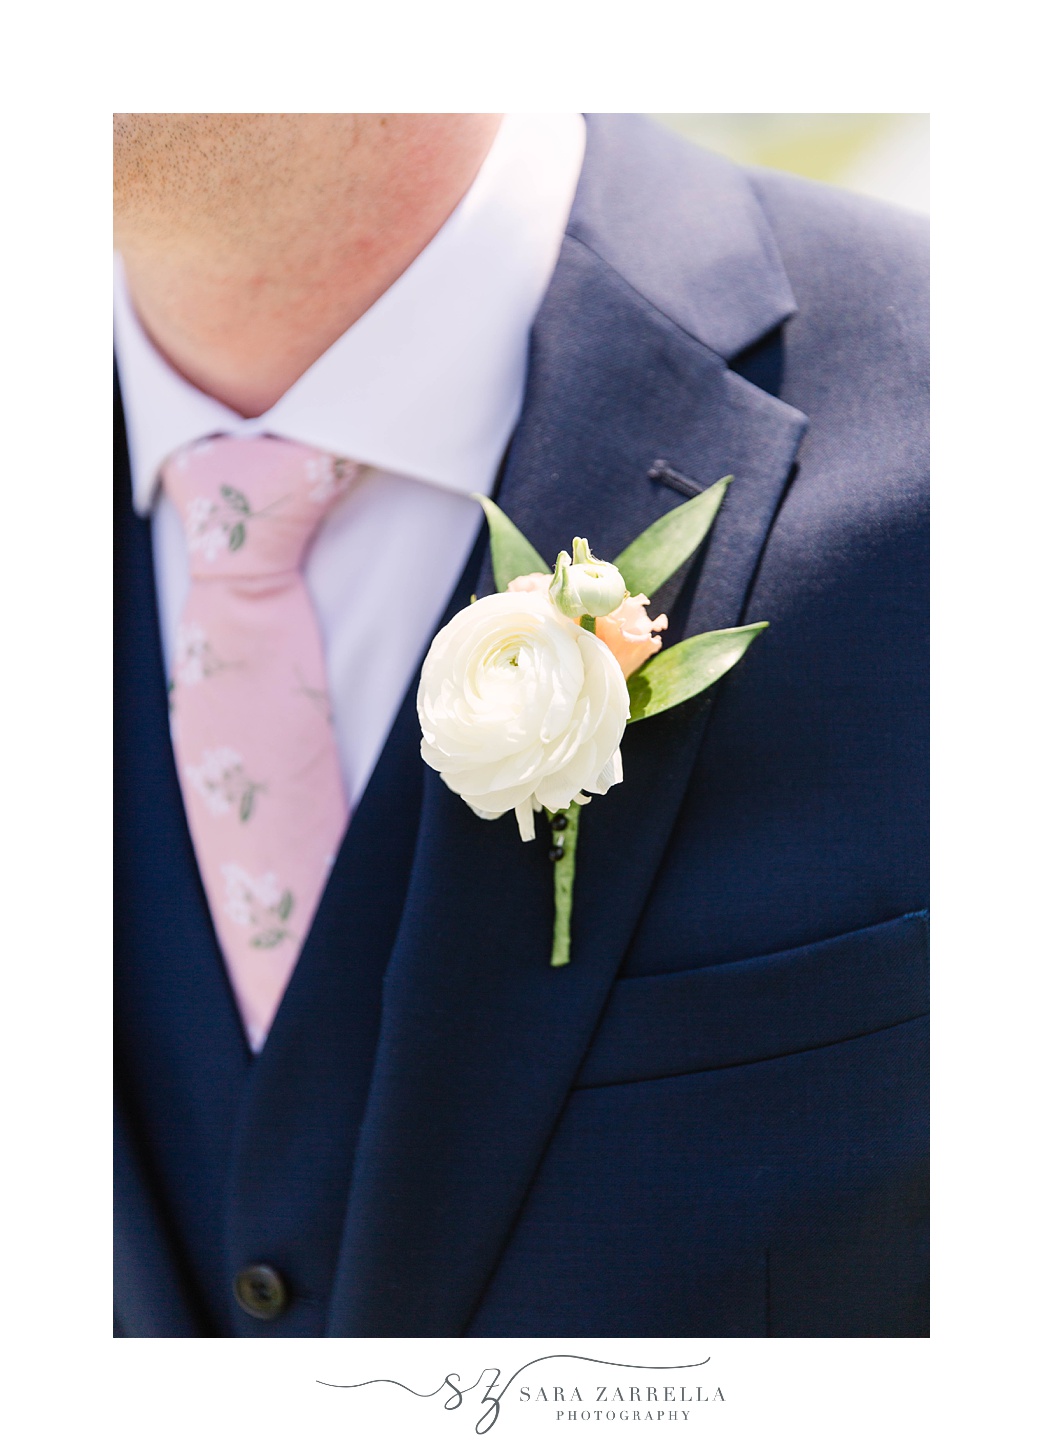 groom's white boutonnière for Gurney’s Newport Resort wedding day